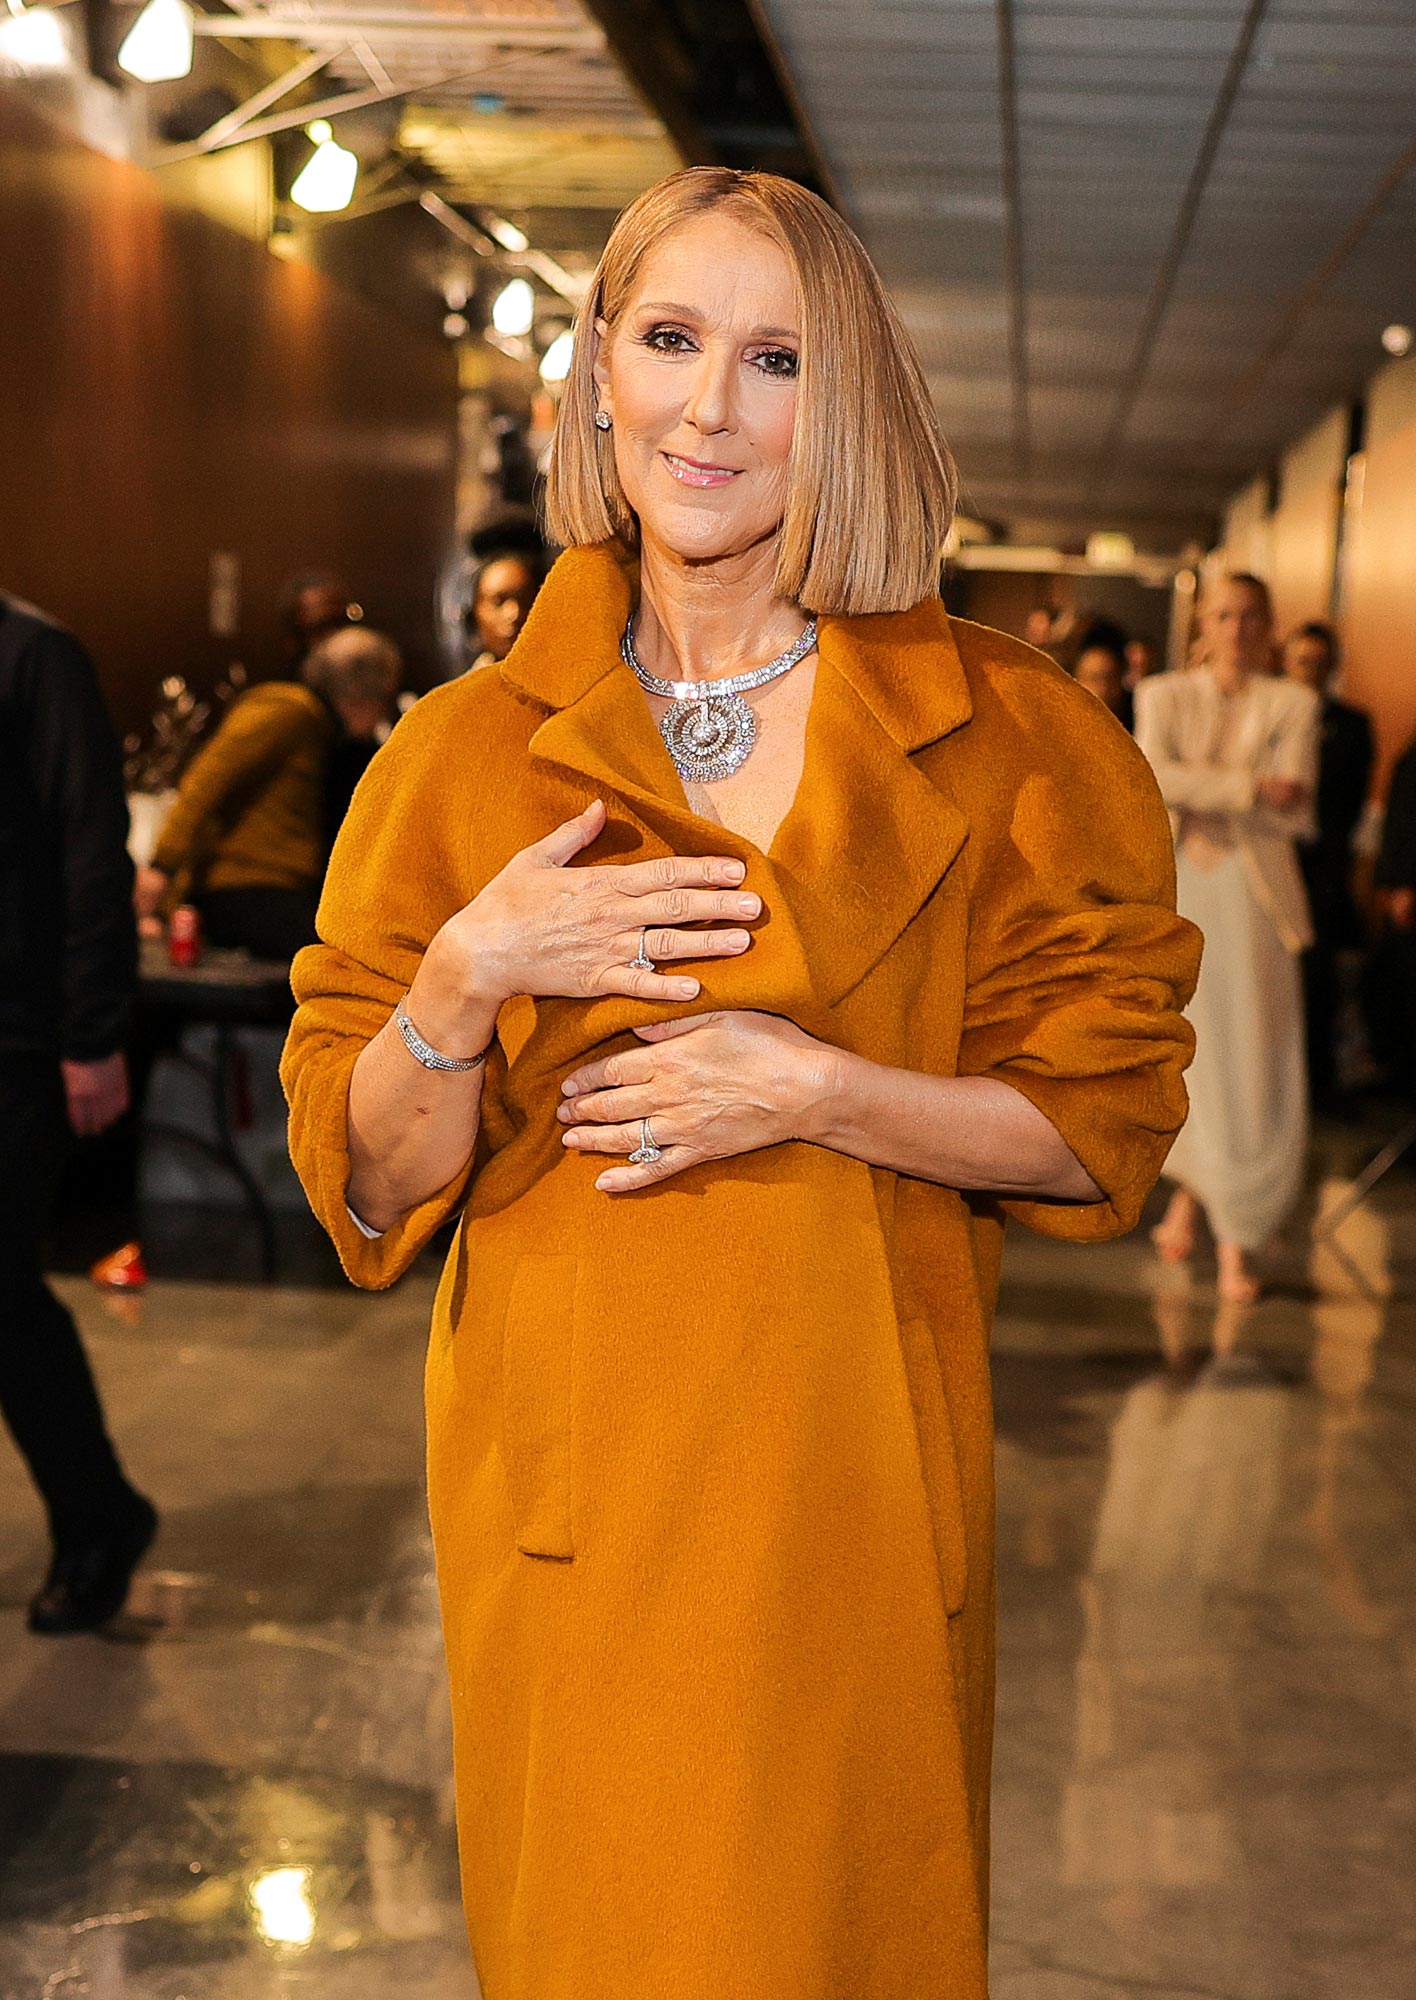 Celine Dion's Inspiring Grammy Awards Appearance Amid Health Battle